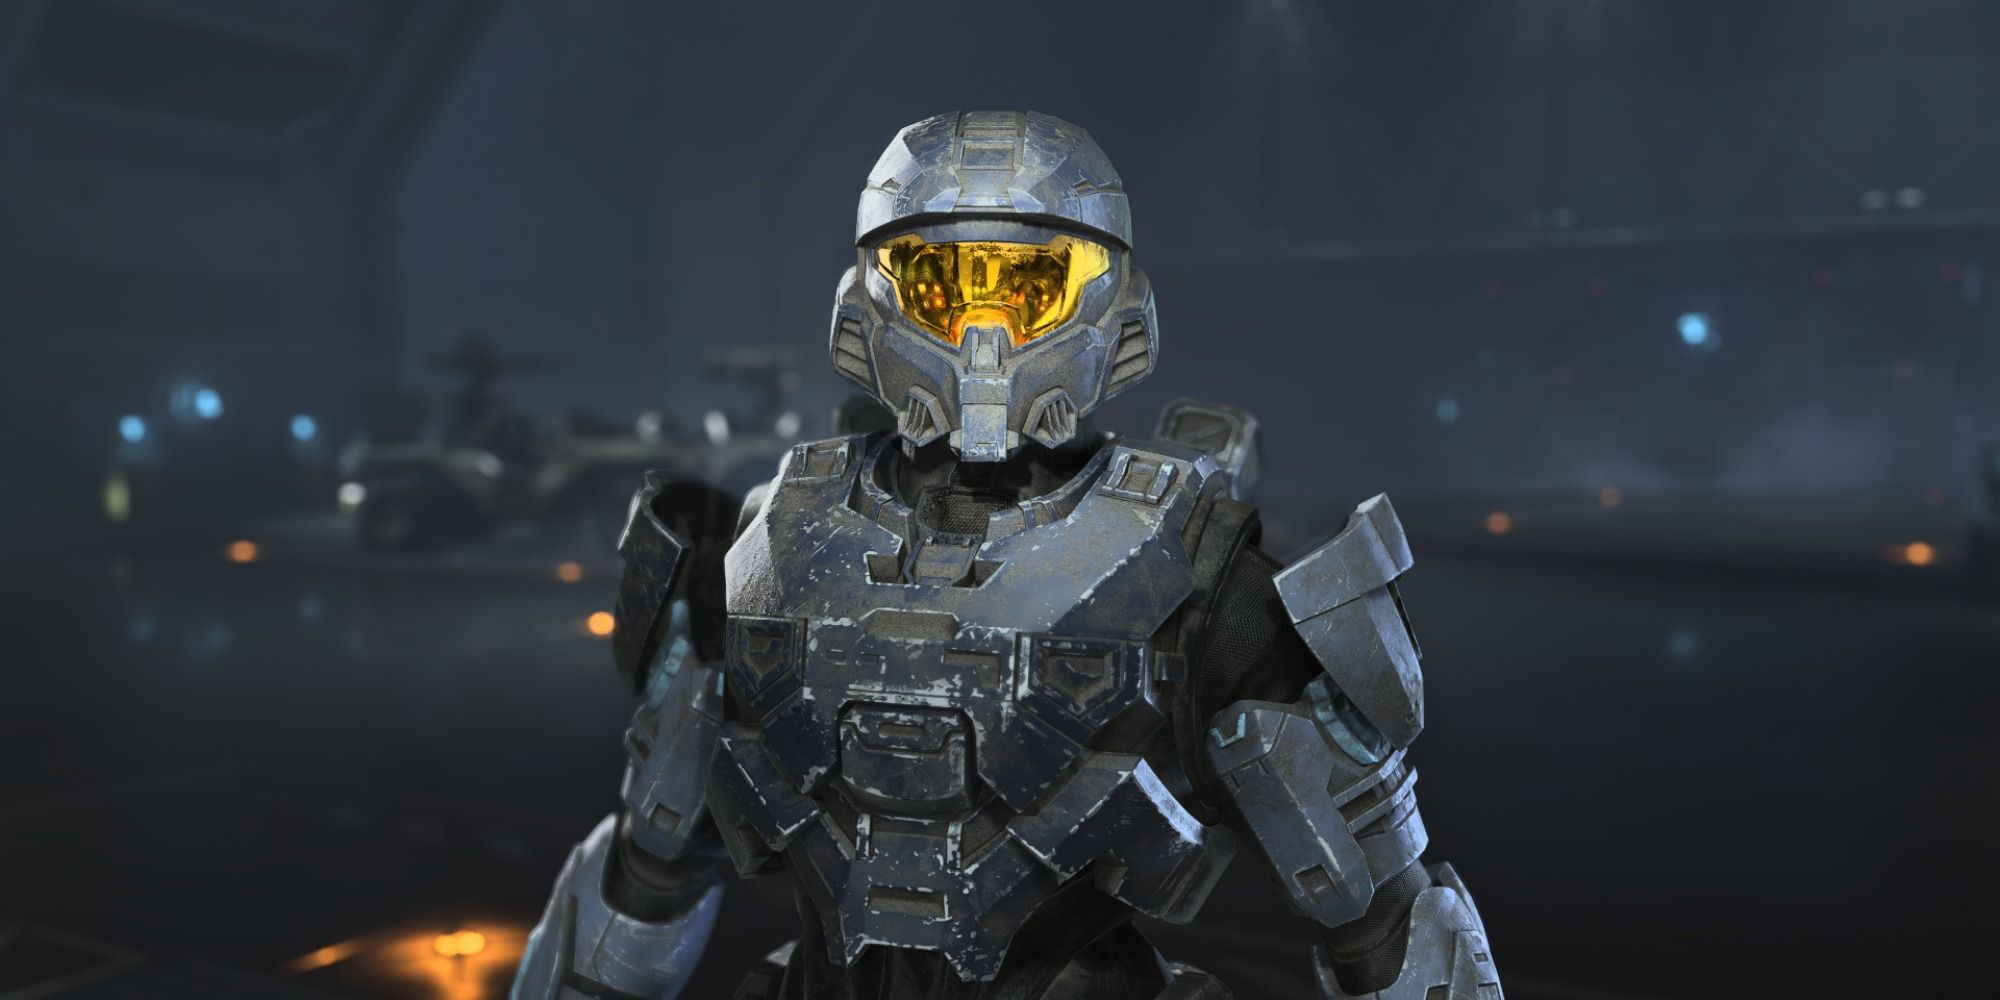 The Mark VII Helmet in Halo Infinite